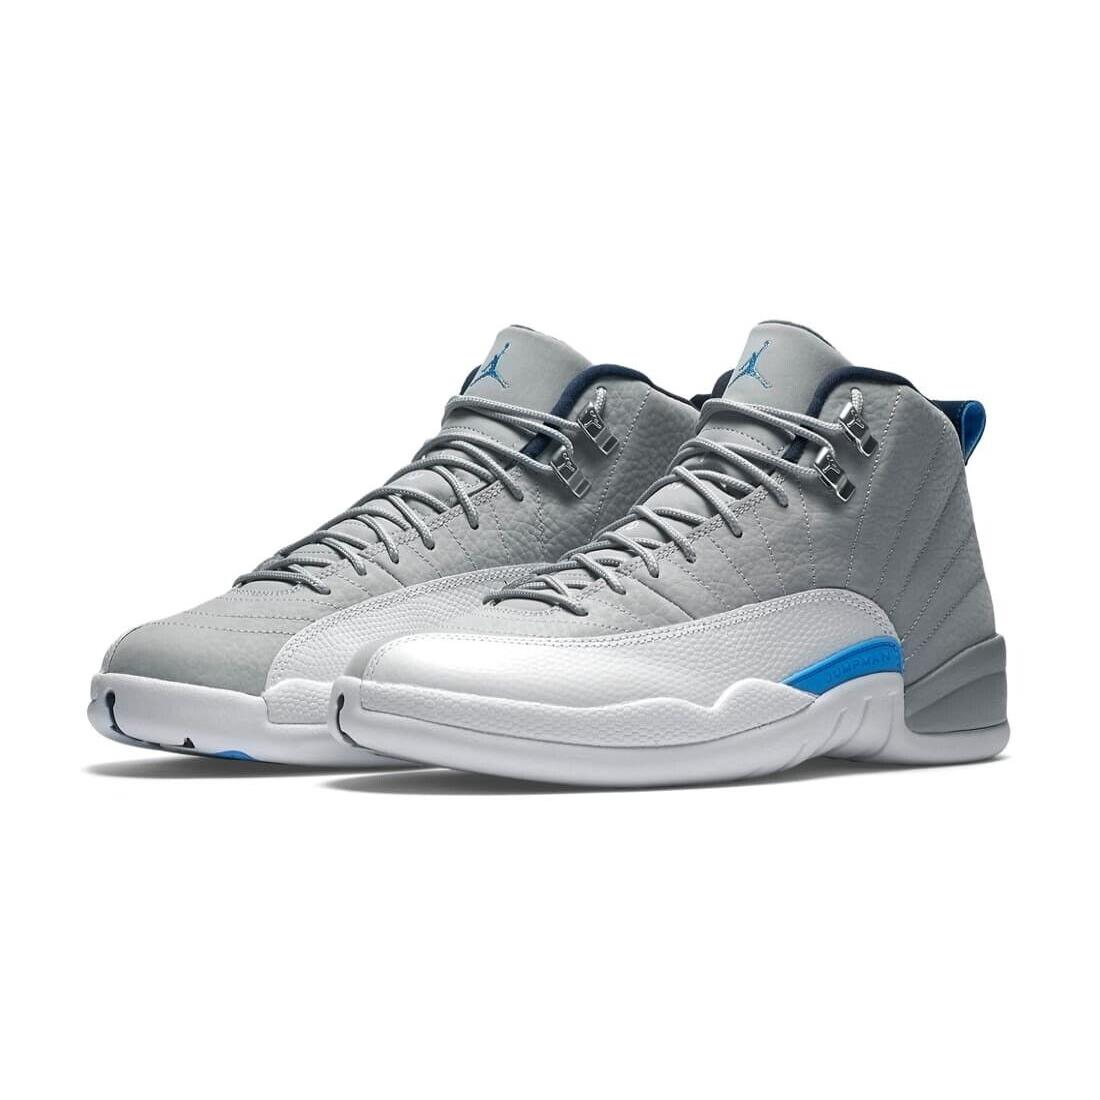 2016 Nike Air Jordan 12 Xii Retro Wolf Grey Unc Blue White Size 10.5. 130690-007